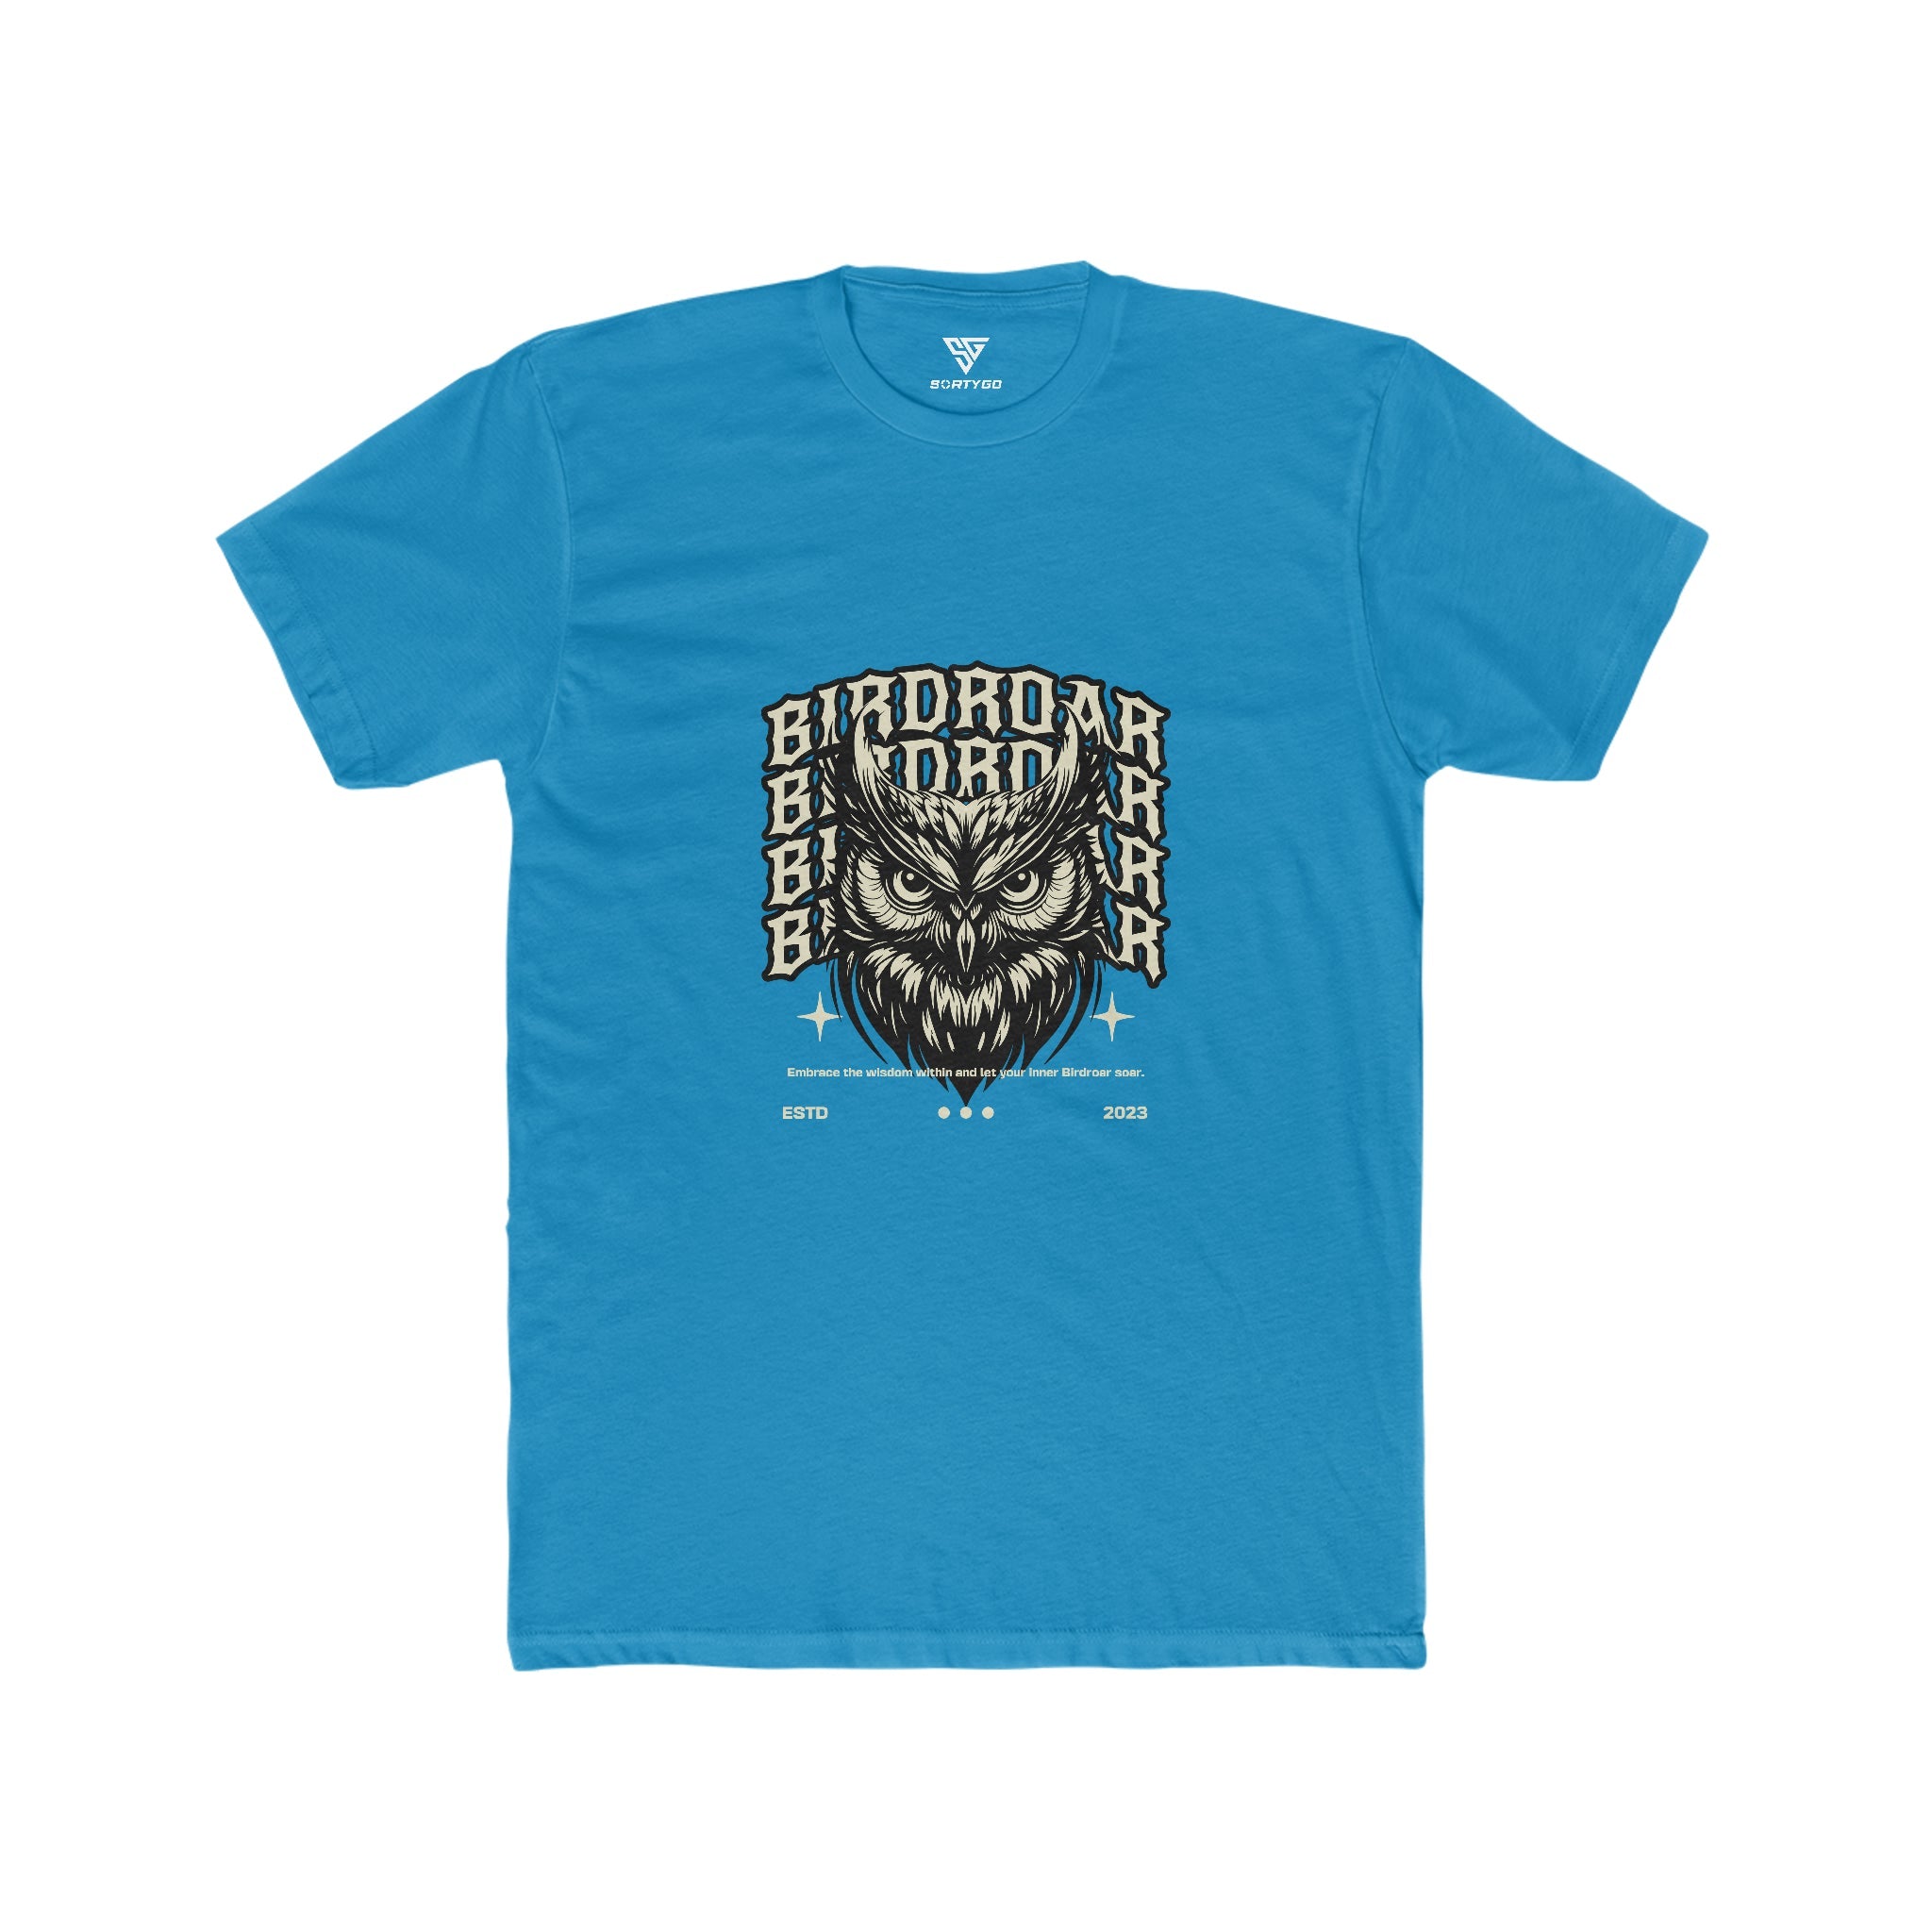 SORTYGO - Birdroar Men Fitted T-Shirt in Solid Turquoise